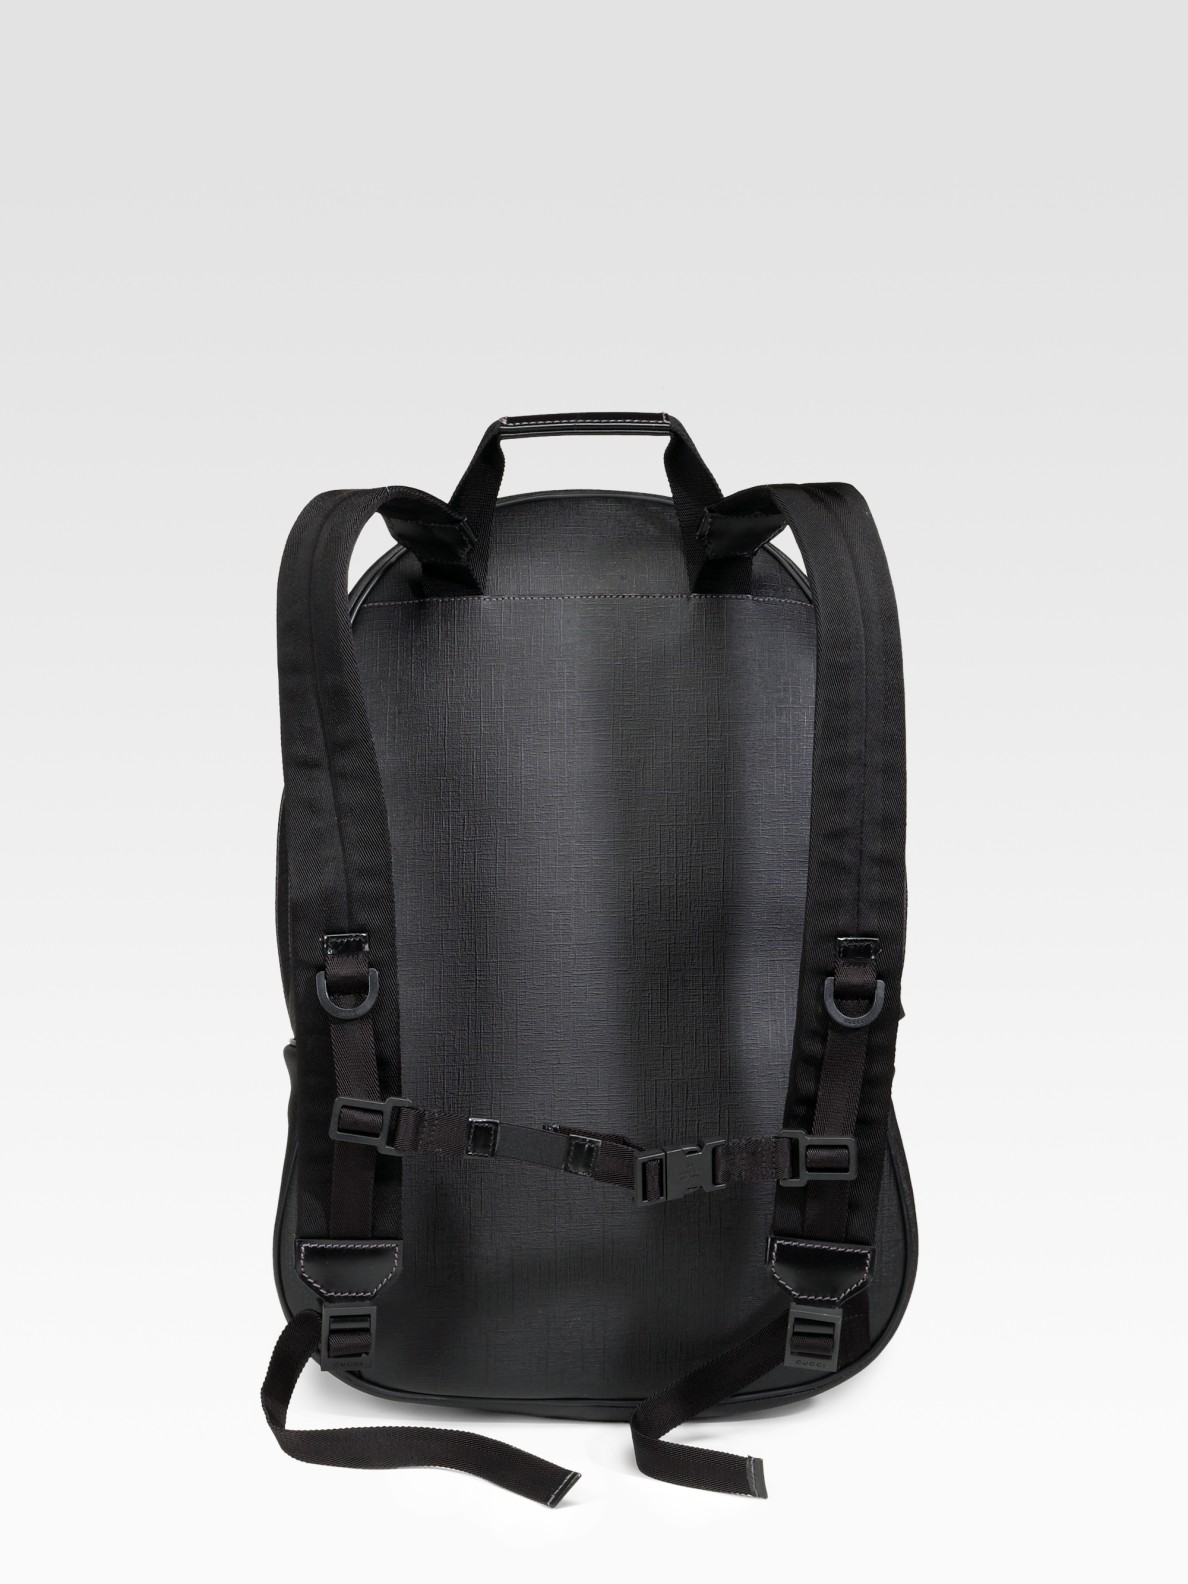 Gucci Black Plus Backpack for Men - Lyst